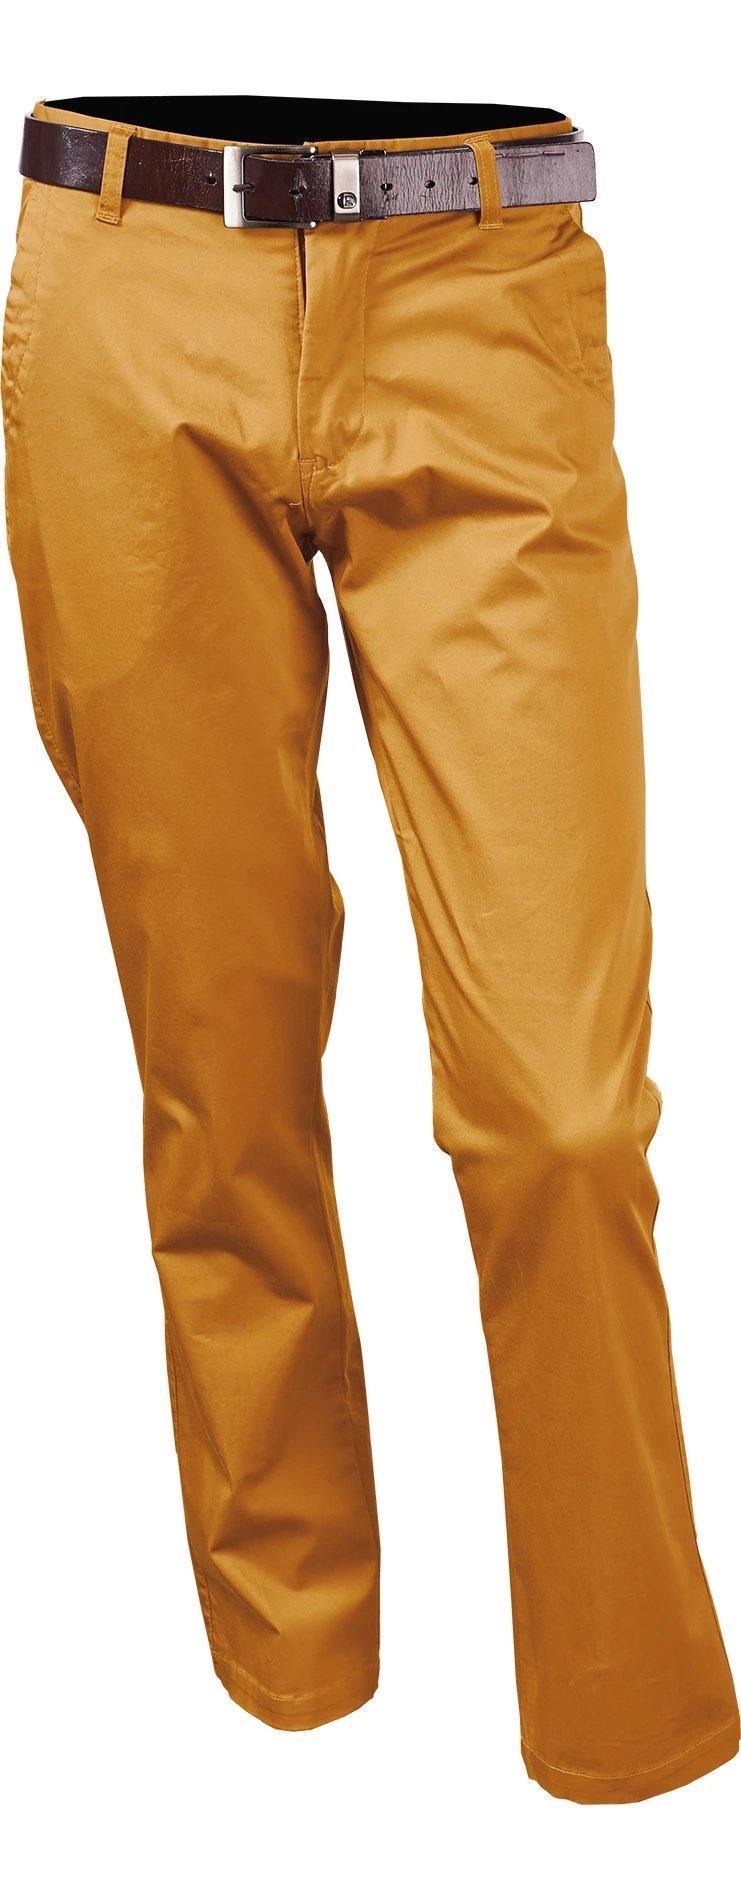 Men's Chino Casual Pants color Khaki - Upscale Men's Fashion